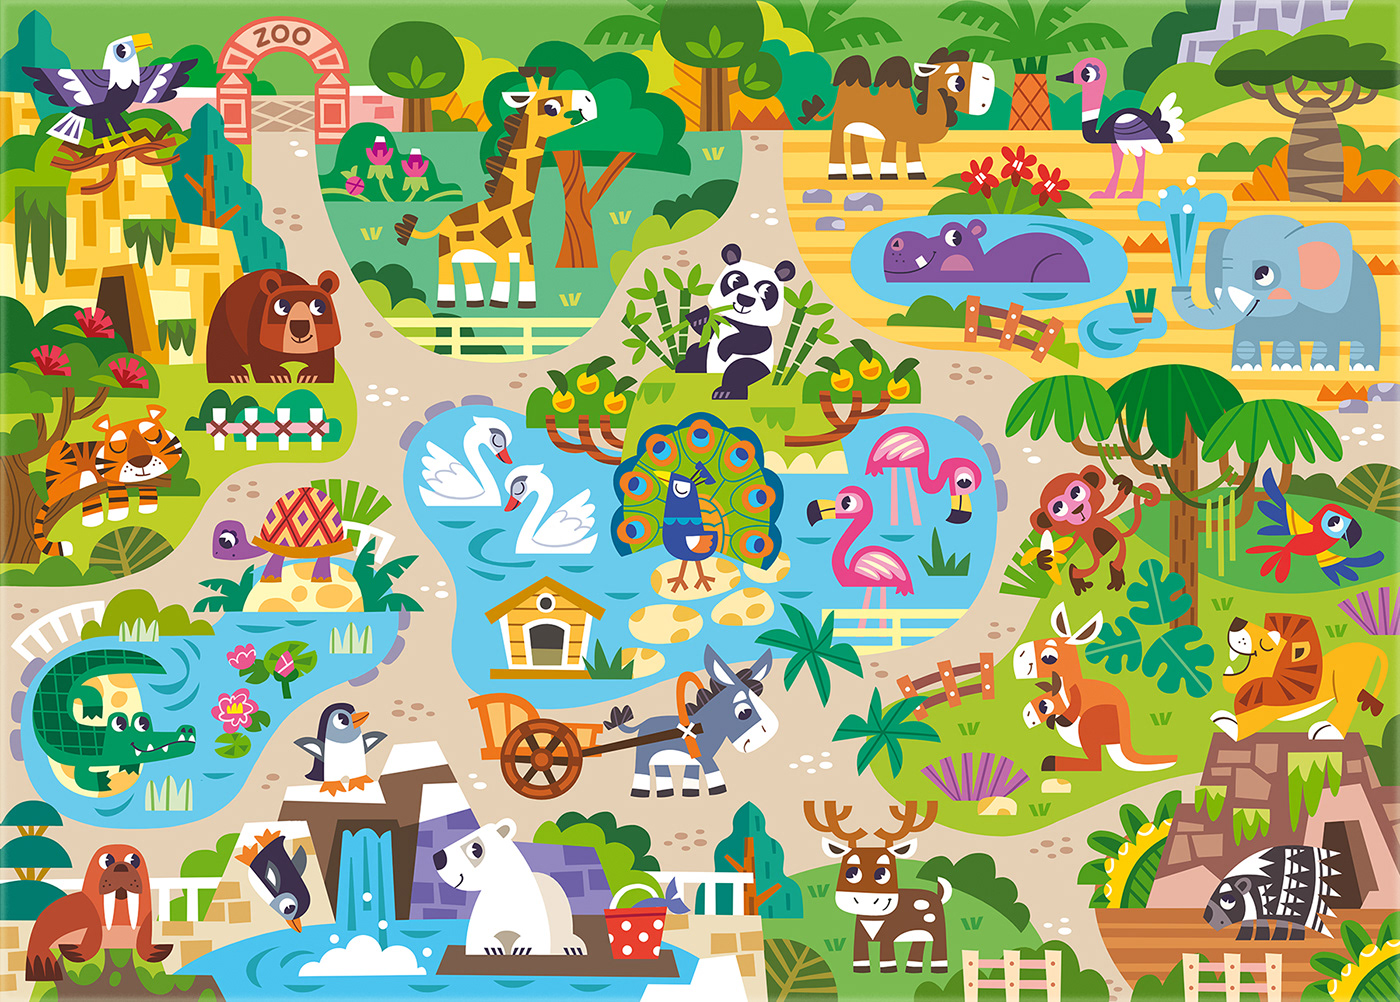 Jigsaw puzzle activity book for children magazine zoo animals Wimmelbuch kids toy